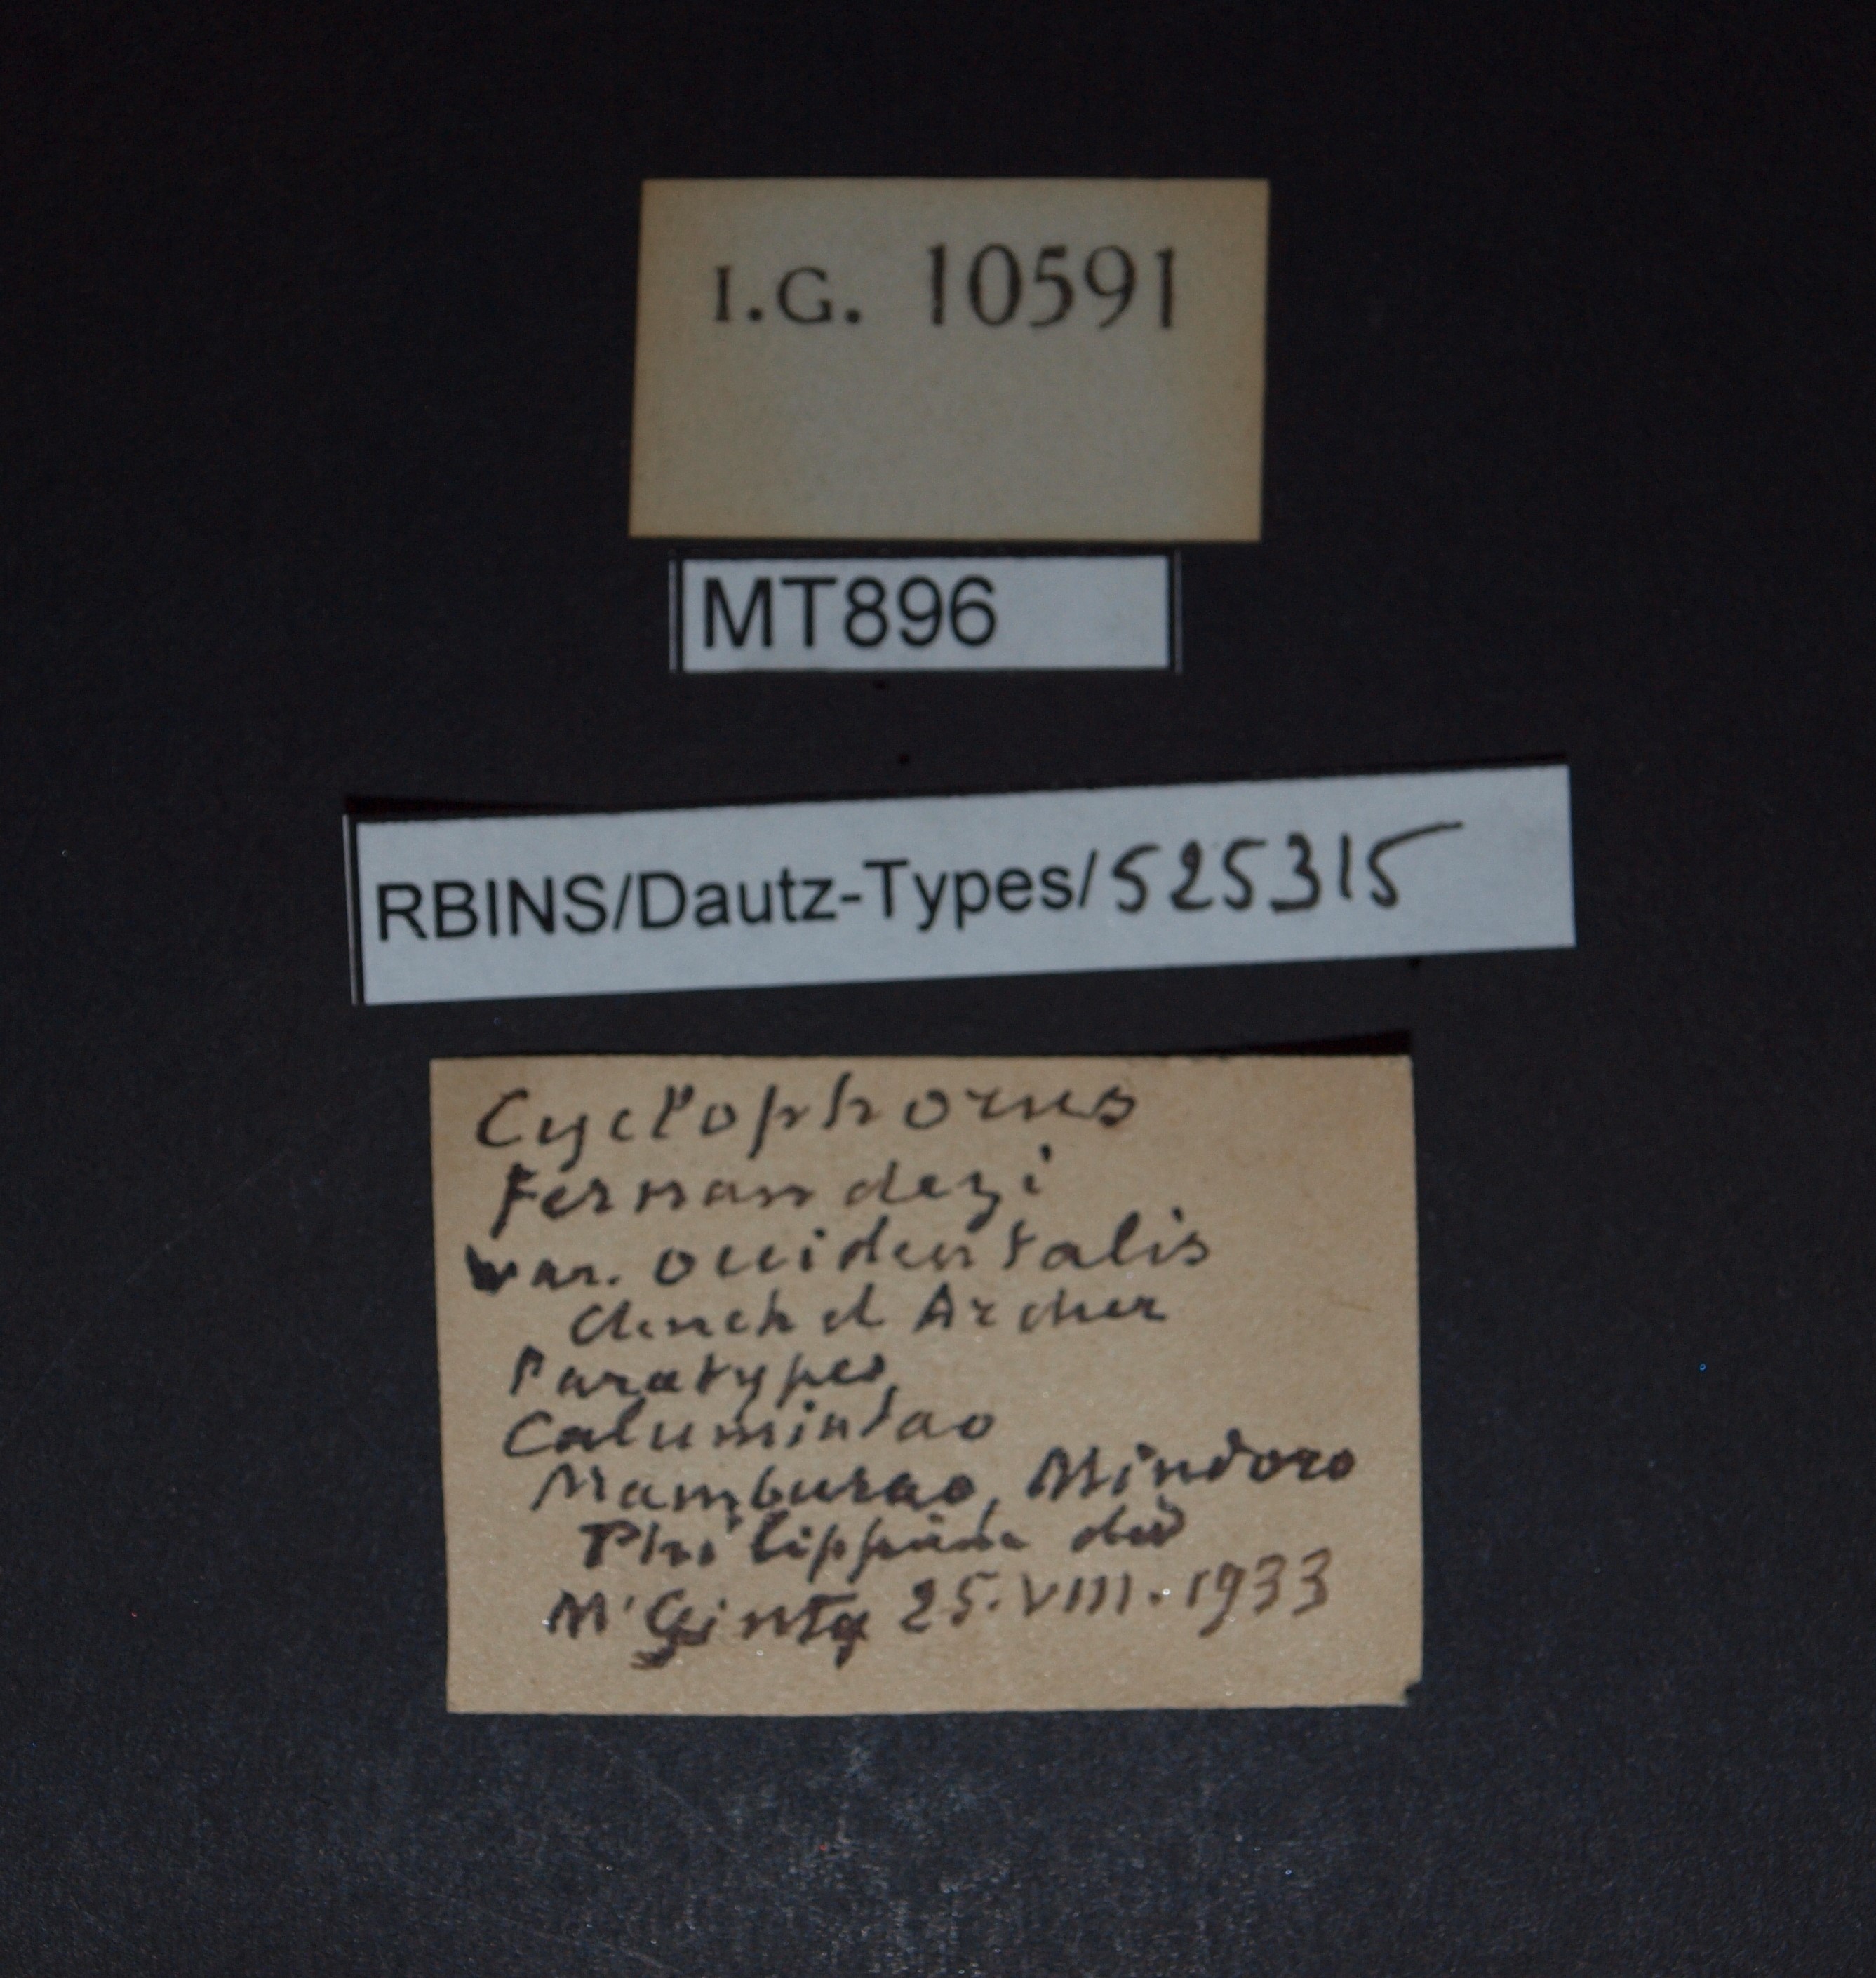 BE-RBINS-INV PARATYPE MT 896 Cyclophorus fernandezi var. occidentalis LABELS.jpg